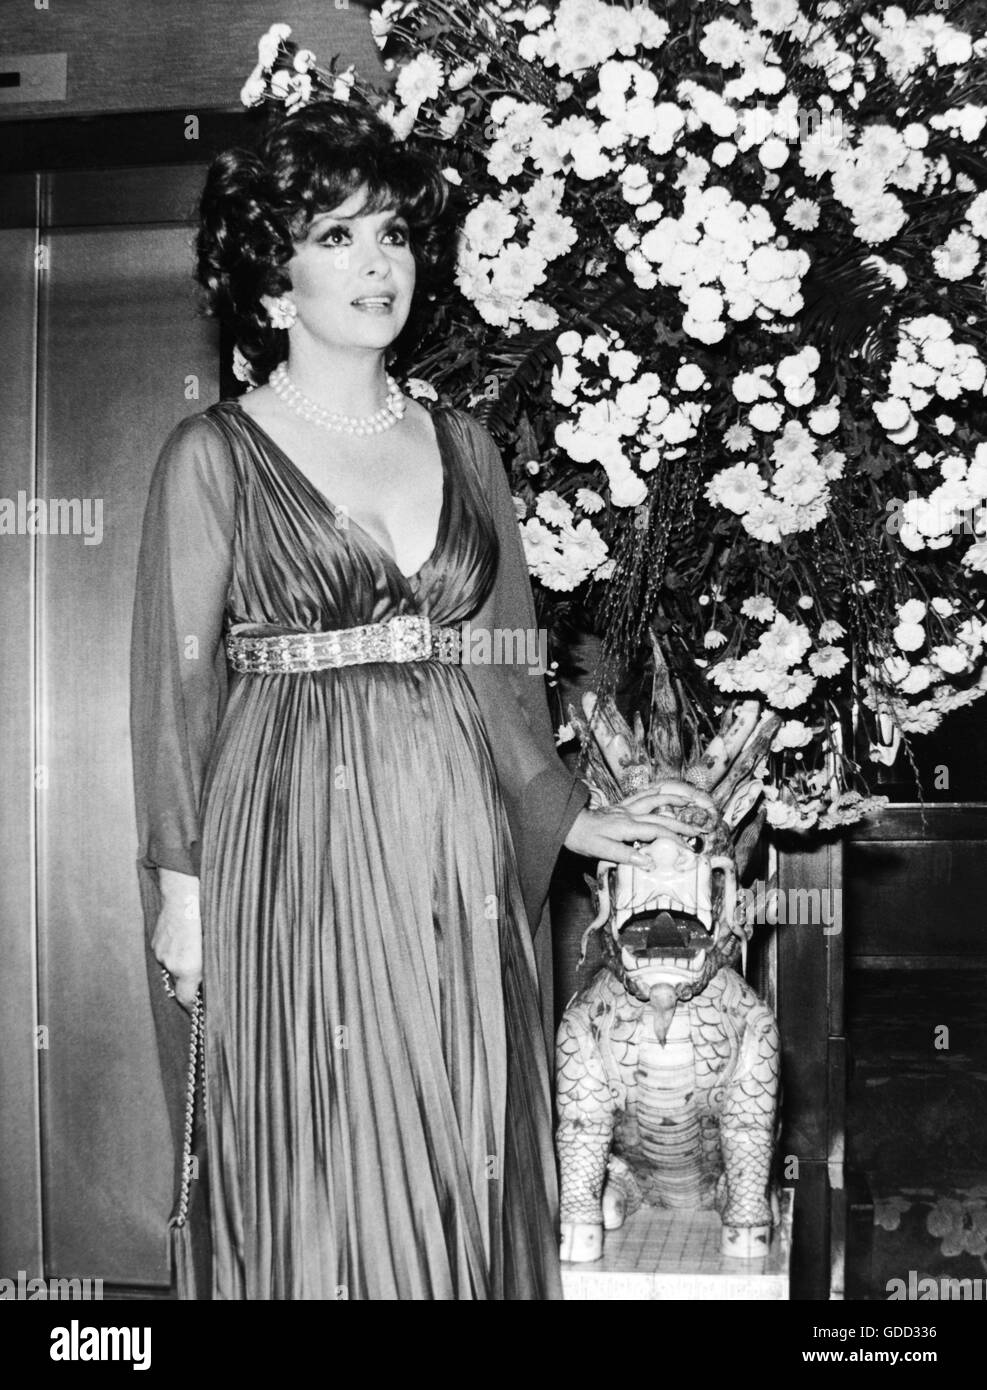 Lollobrigida, Gina, * 4.7.1927, Italian actress, half length, at party celebrating 3 years anniversary of 'Regine's' nightclub, Düsseldorf, 13.5.1982, Stock Photo